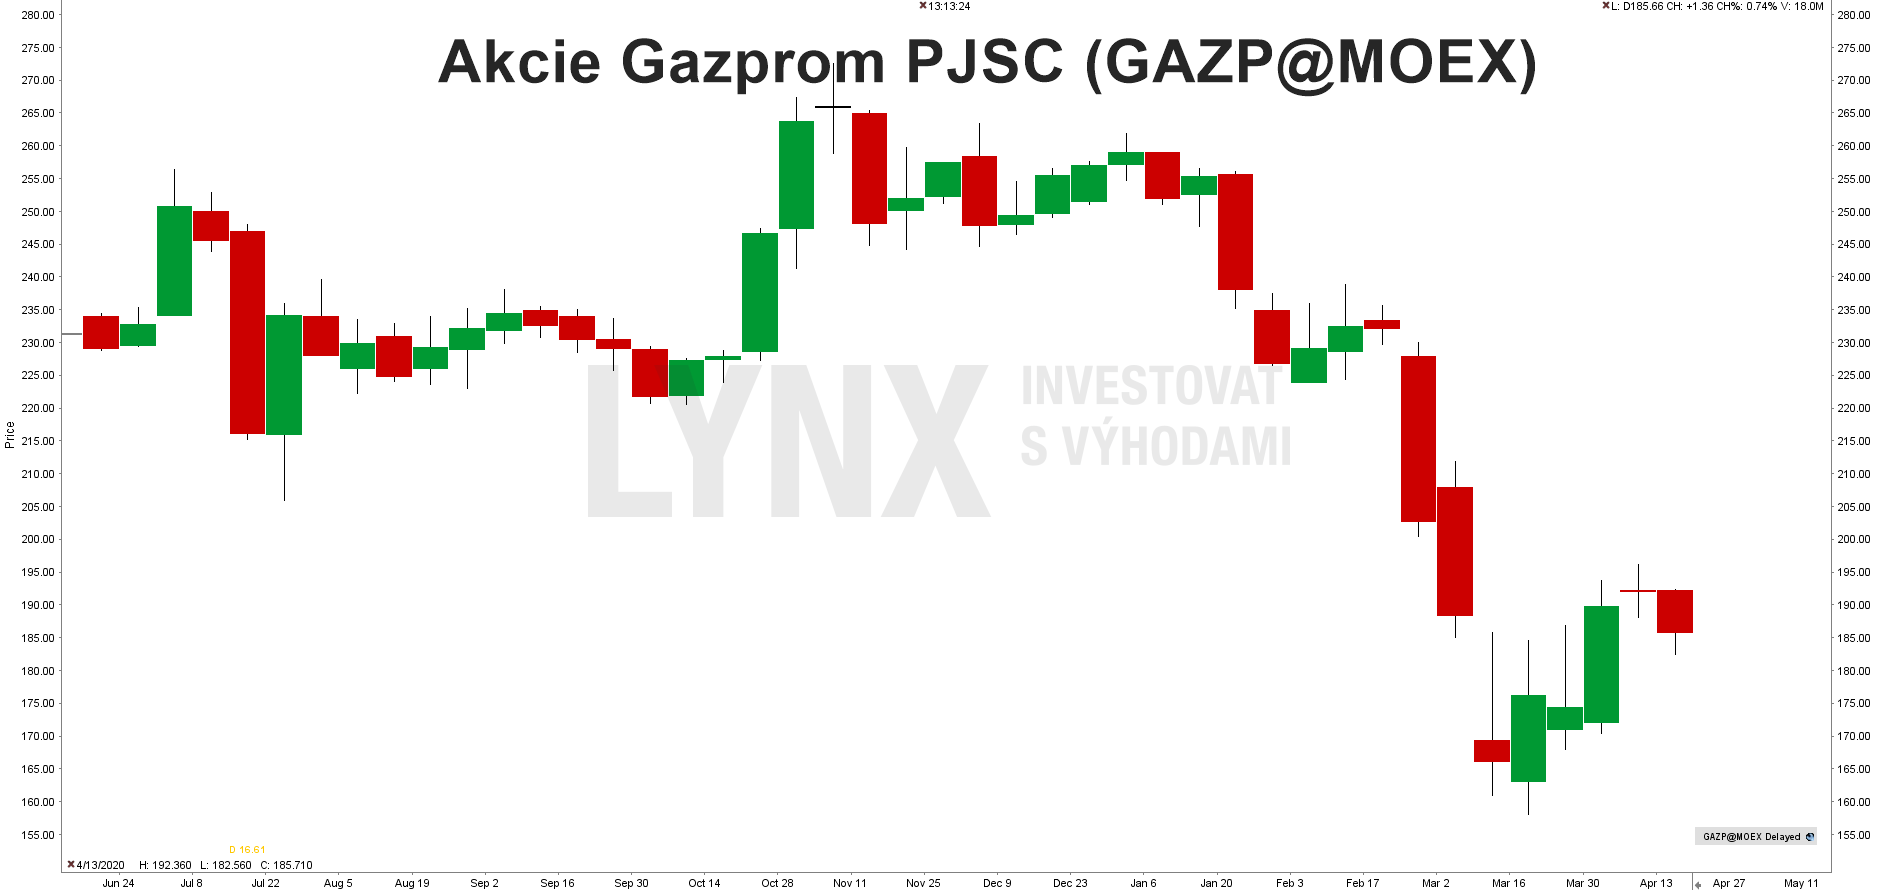 Akcie Gazprom